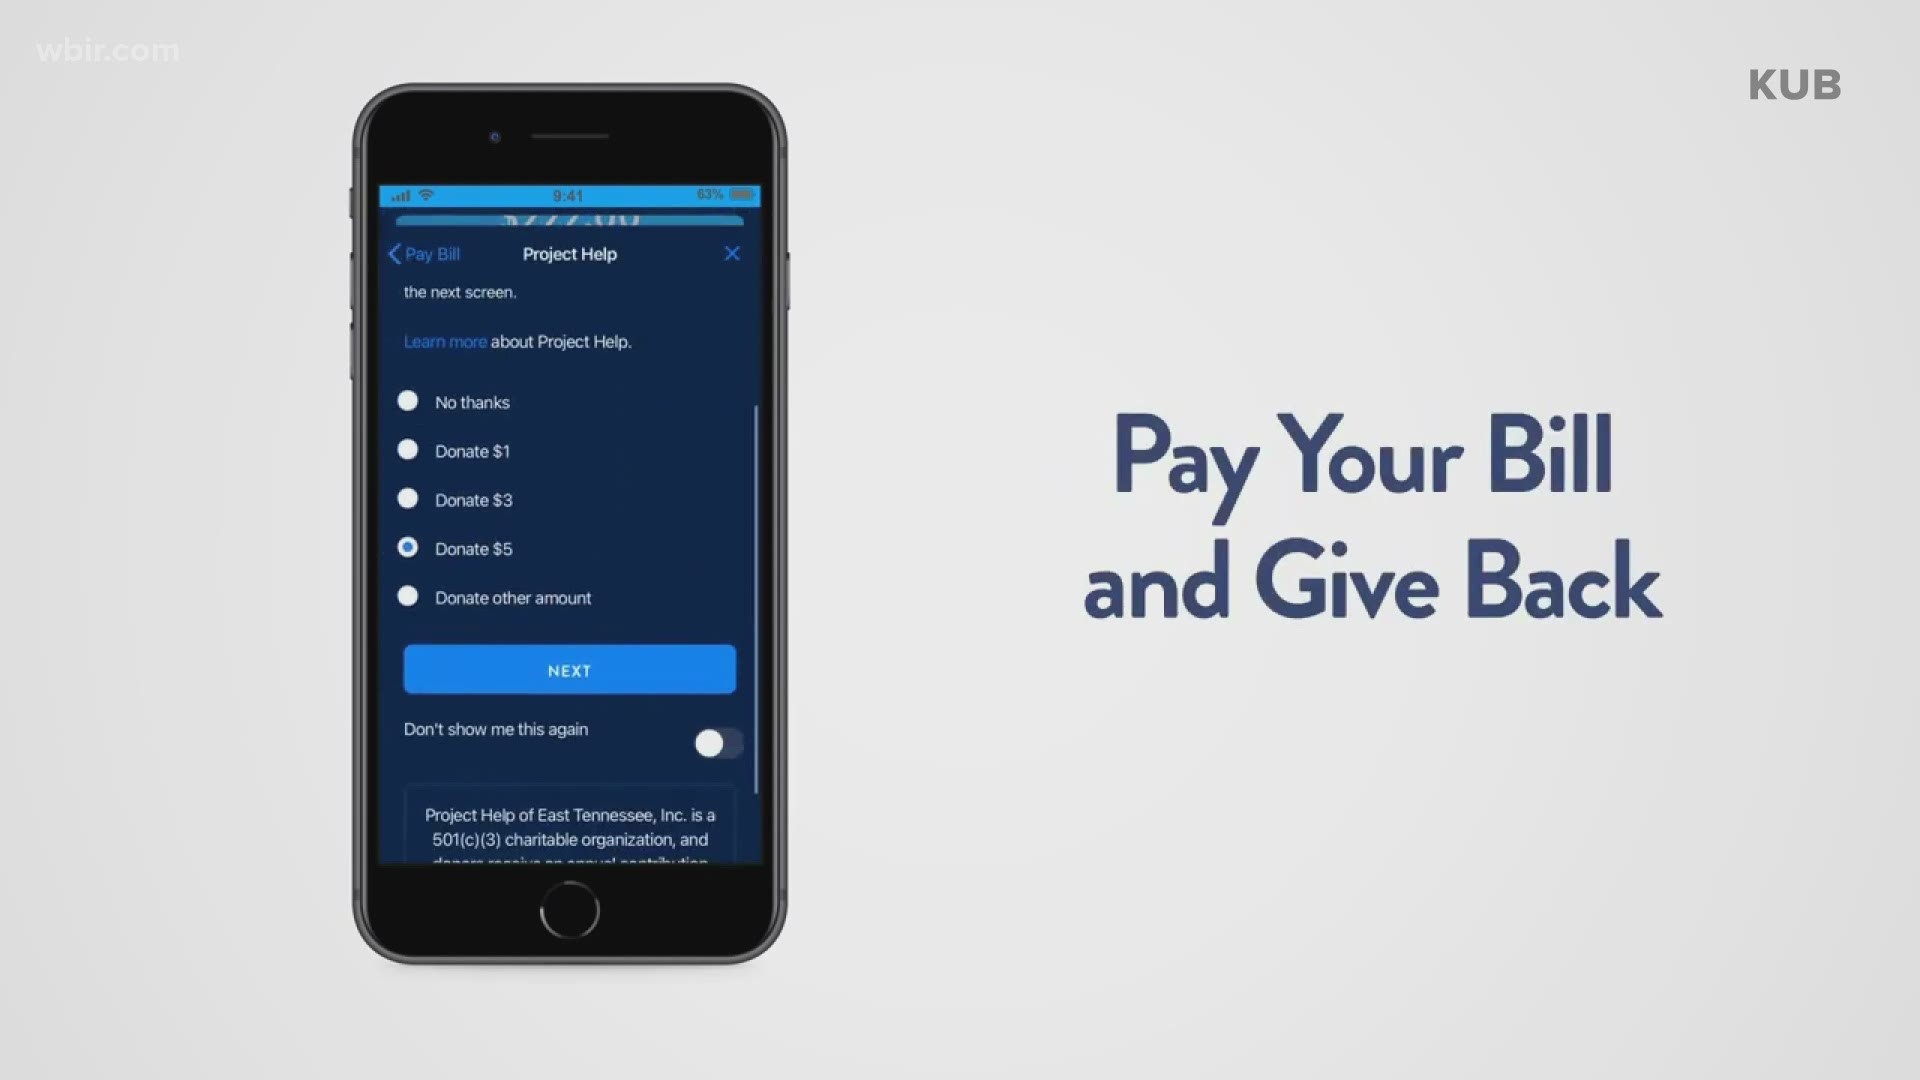 New KUB app speeds up bill paying process